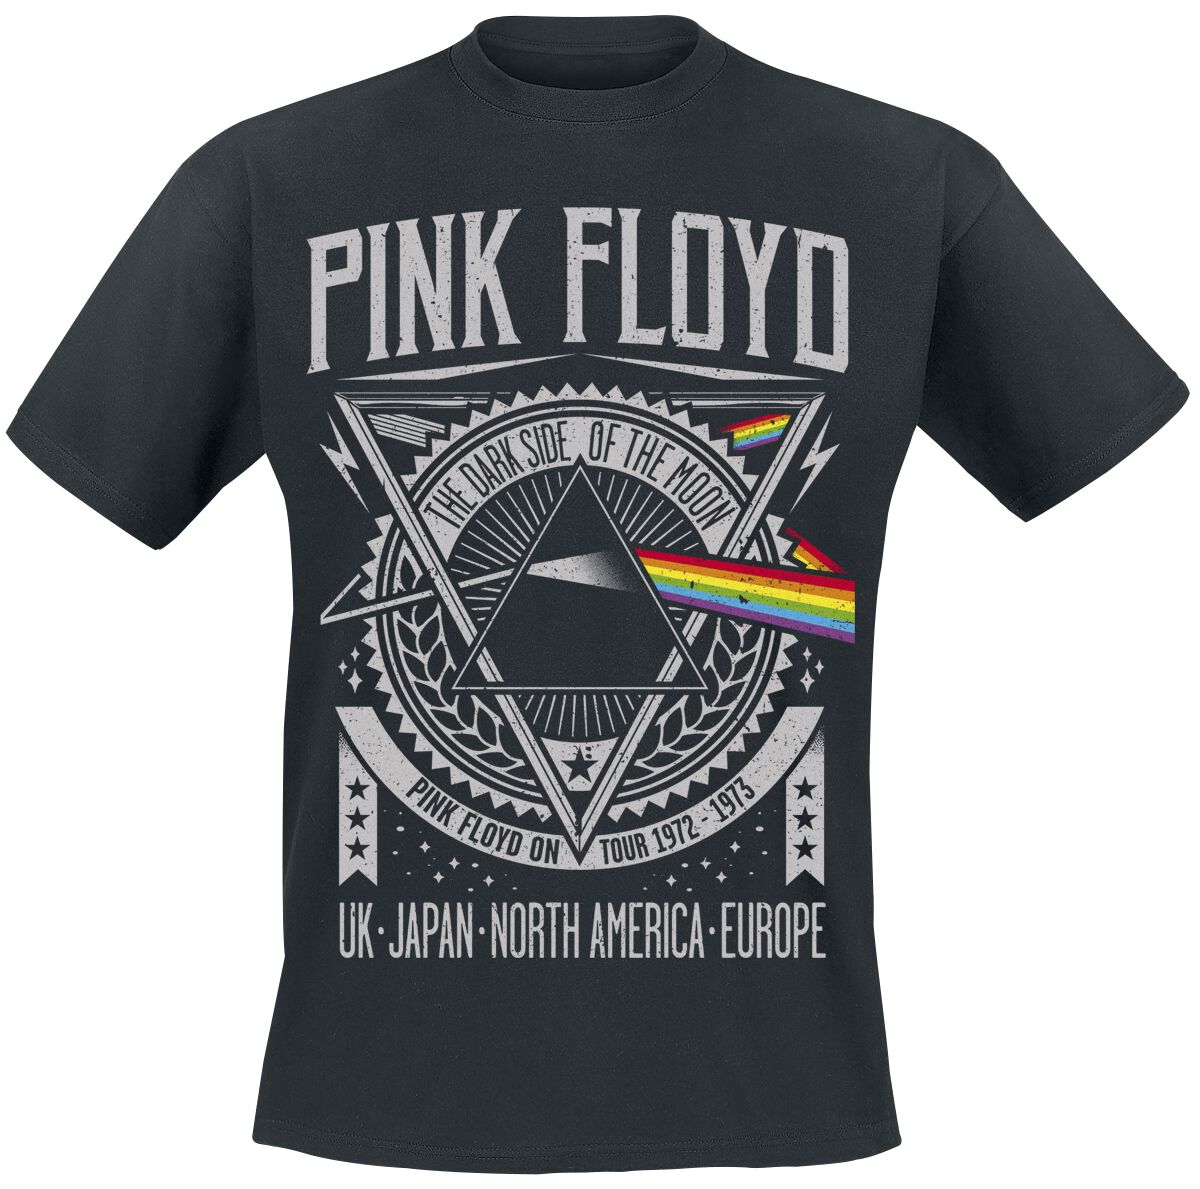 Pink Floyd The Dark Side Of The Moon - Tour 1972 T-Shirt schwarz in XL